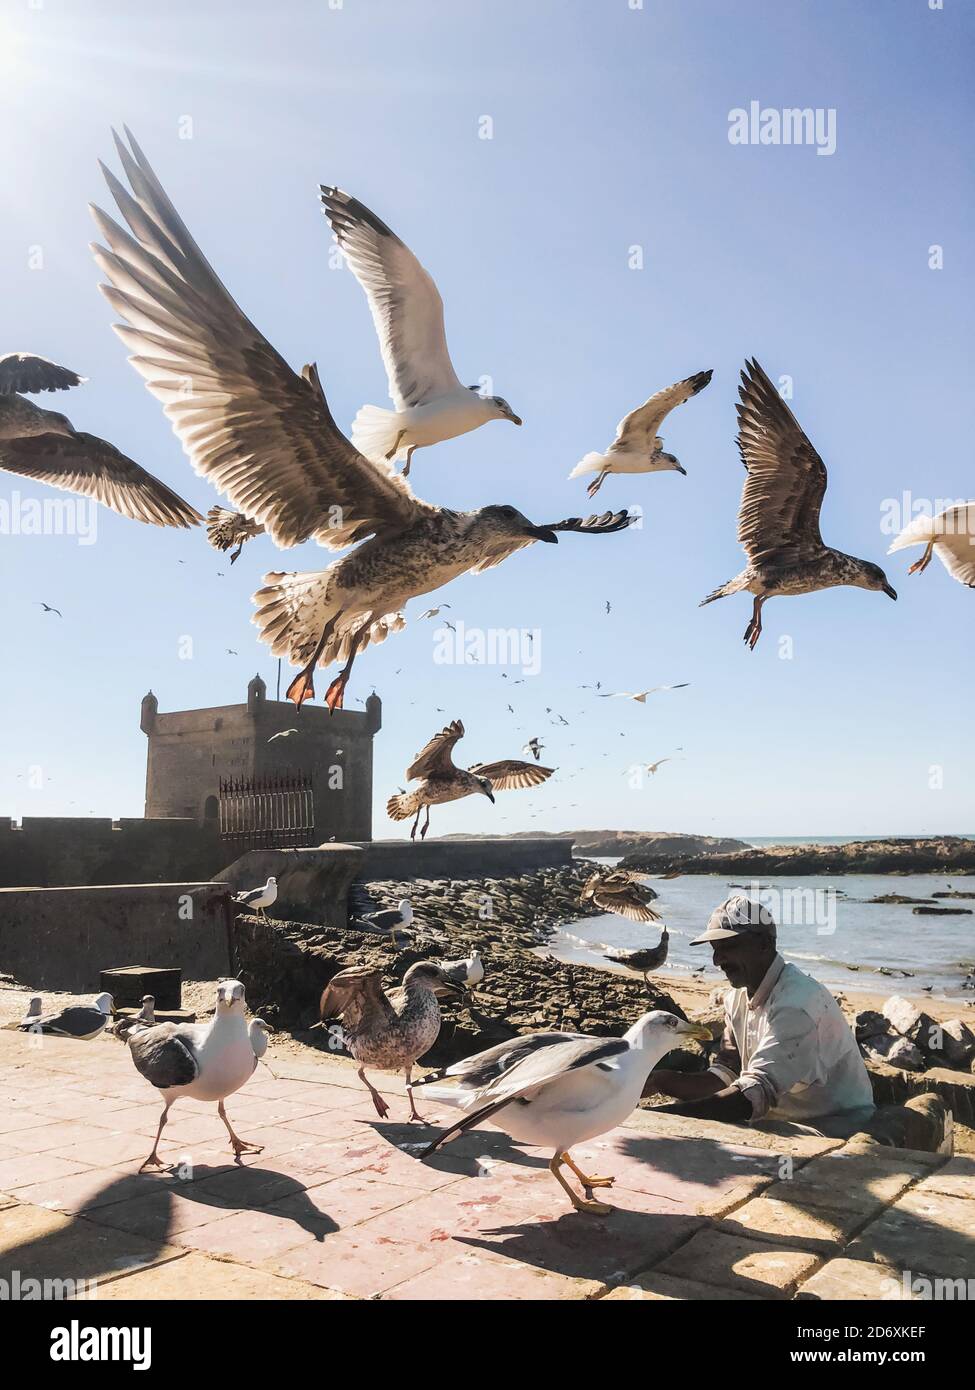 ESSAOUIRA, MOROCCO - SEPTEMBER 10, 2019: Old fisherman feeding seagulls in harbor Essaouira, Morocco. Many birds flying around. Stock Photo